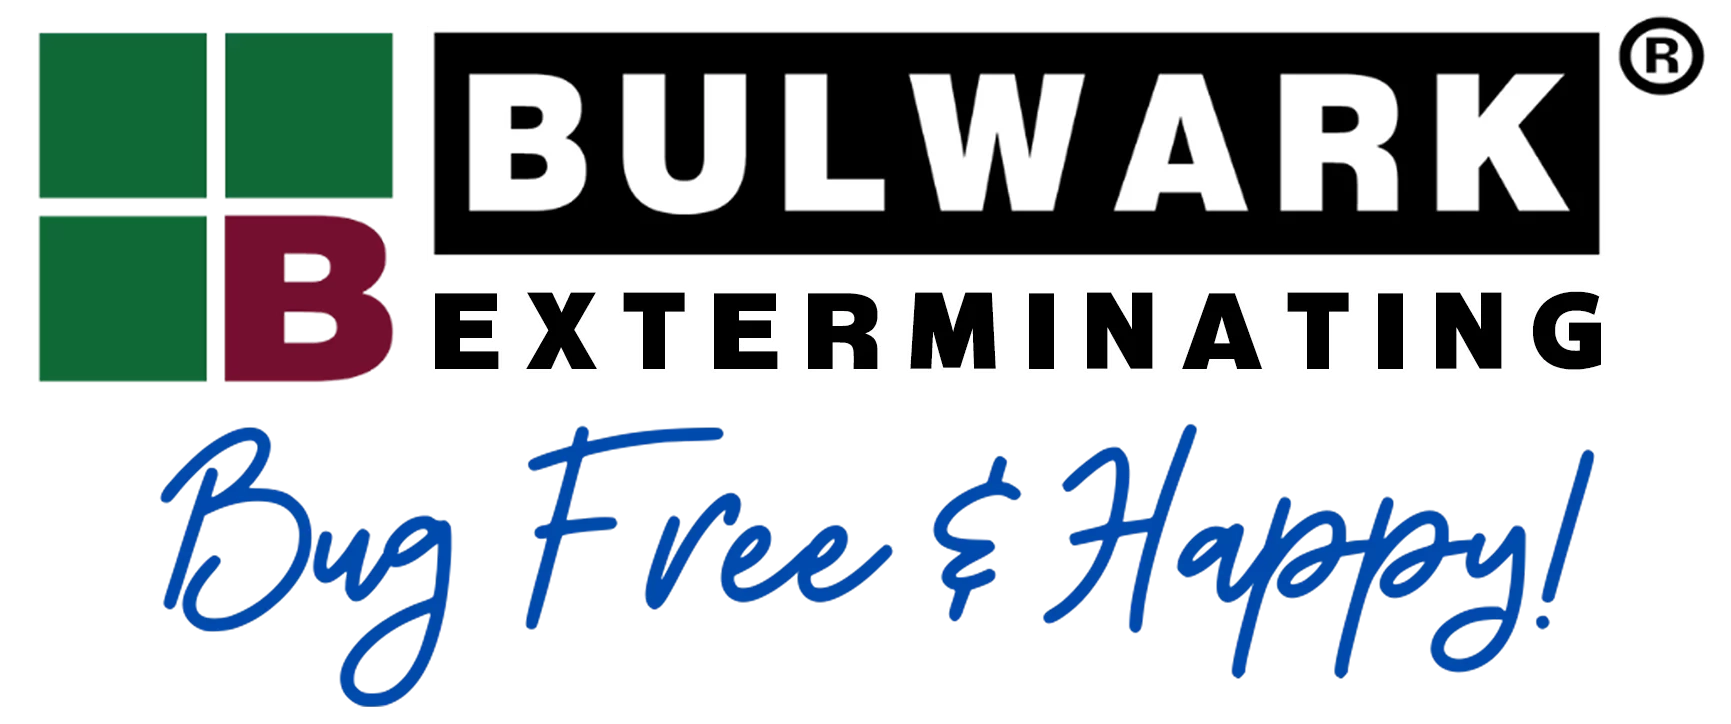 Bulwark Exterminating in Knoxville Logo